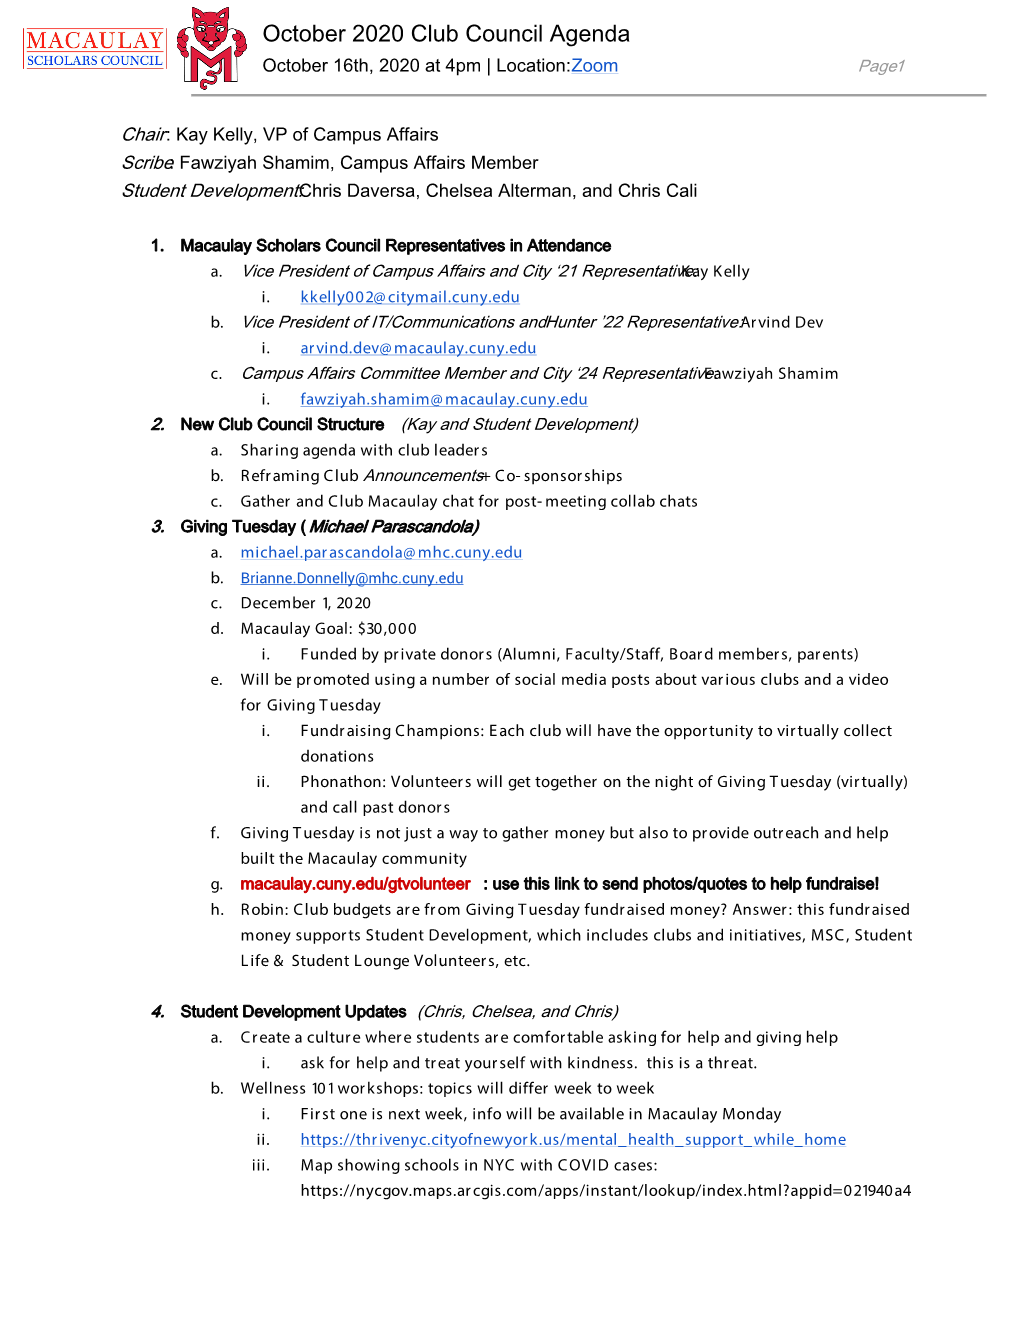 October 2020 Club Council Agenda.Docx